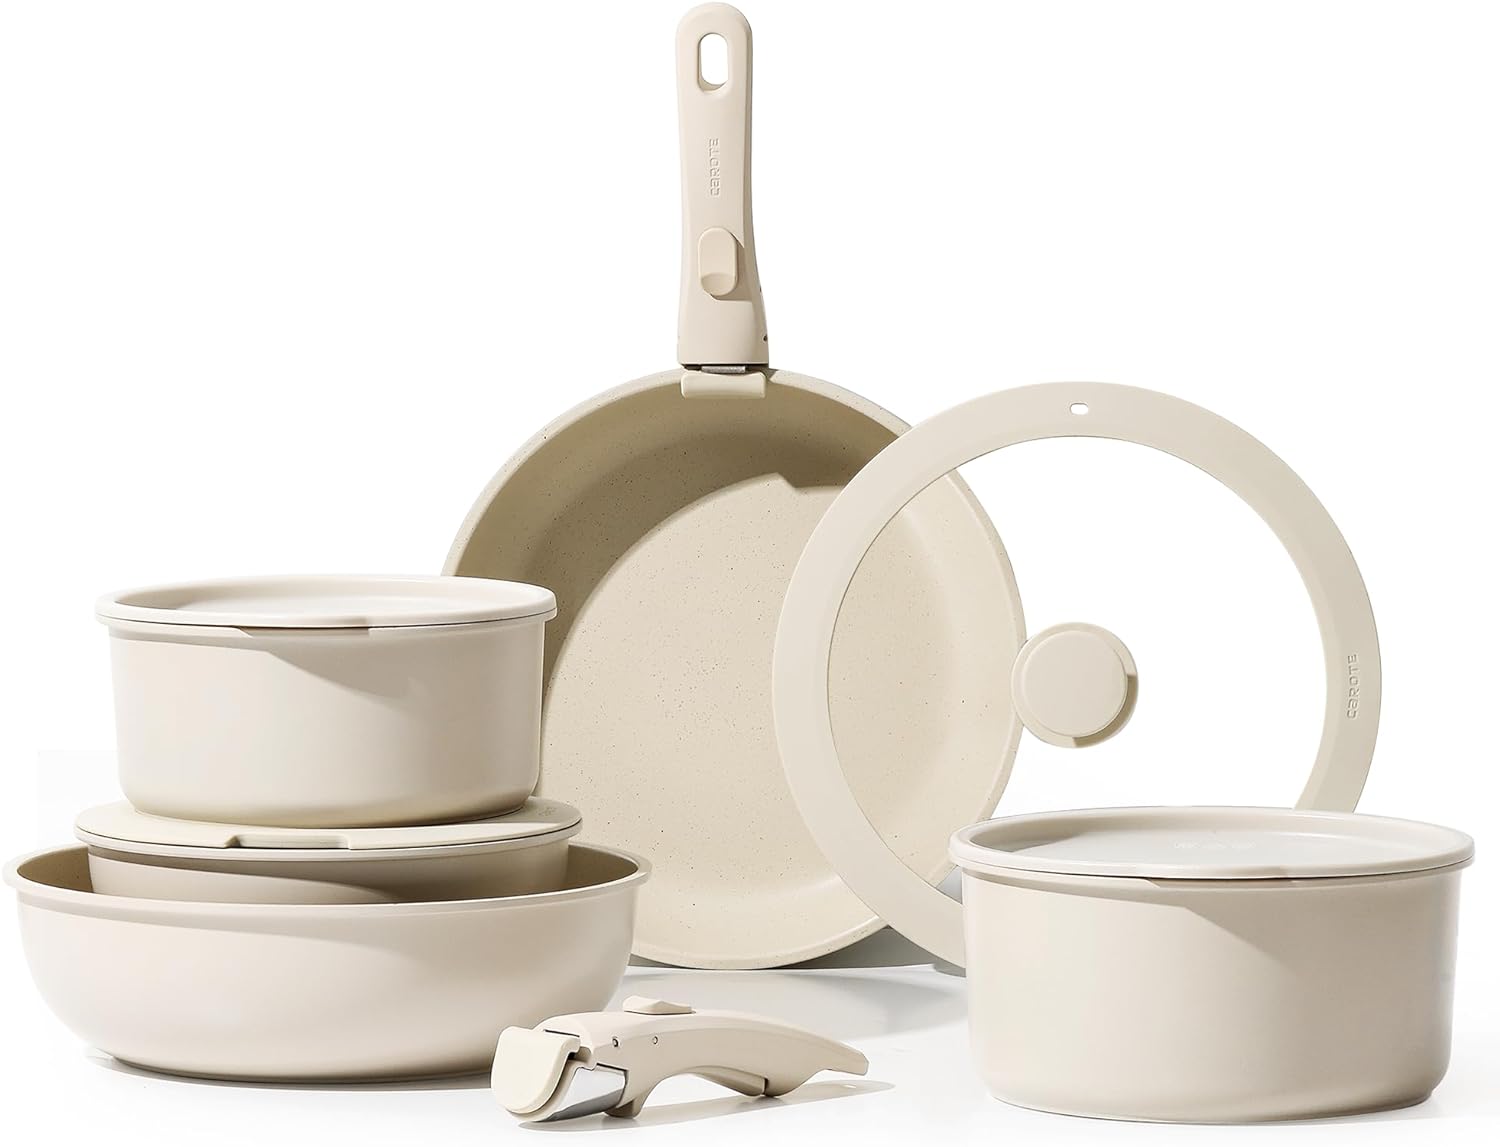 CAROTE 11pcs Pots and Pans Set, Nonstick Kitchen Cookware Sets with Detachable Handles, Induction Cookware, Pans for Cooking, Cooking Pot